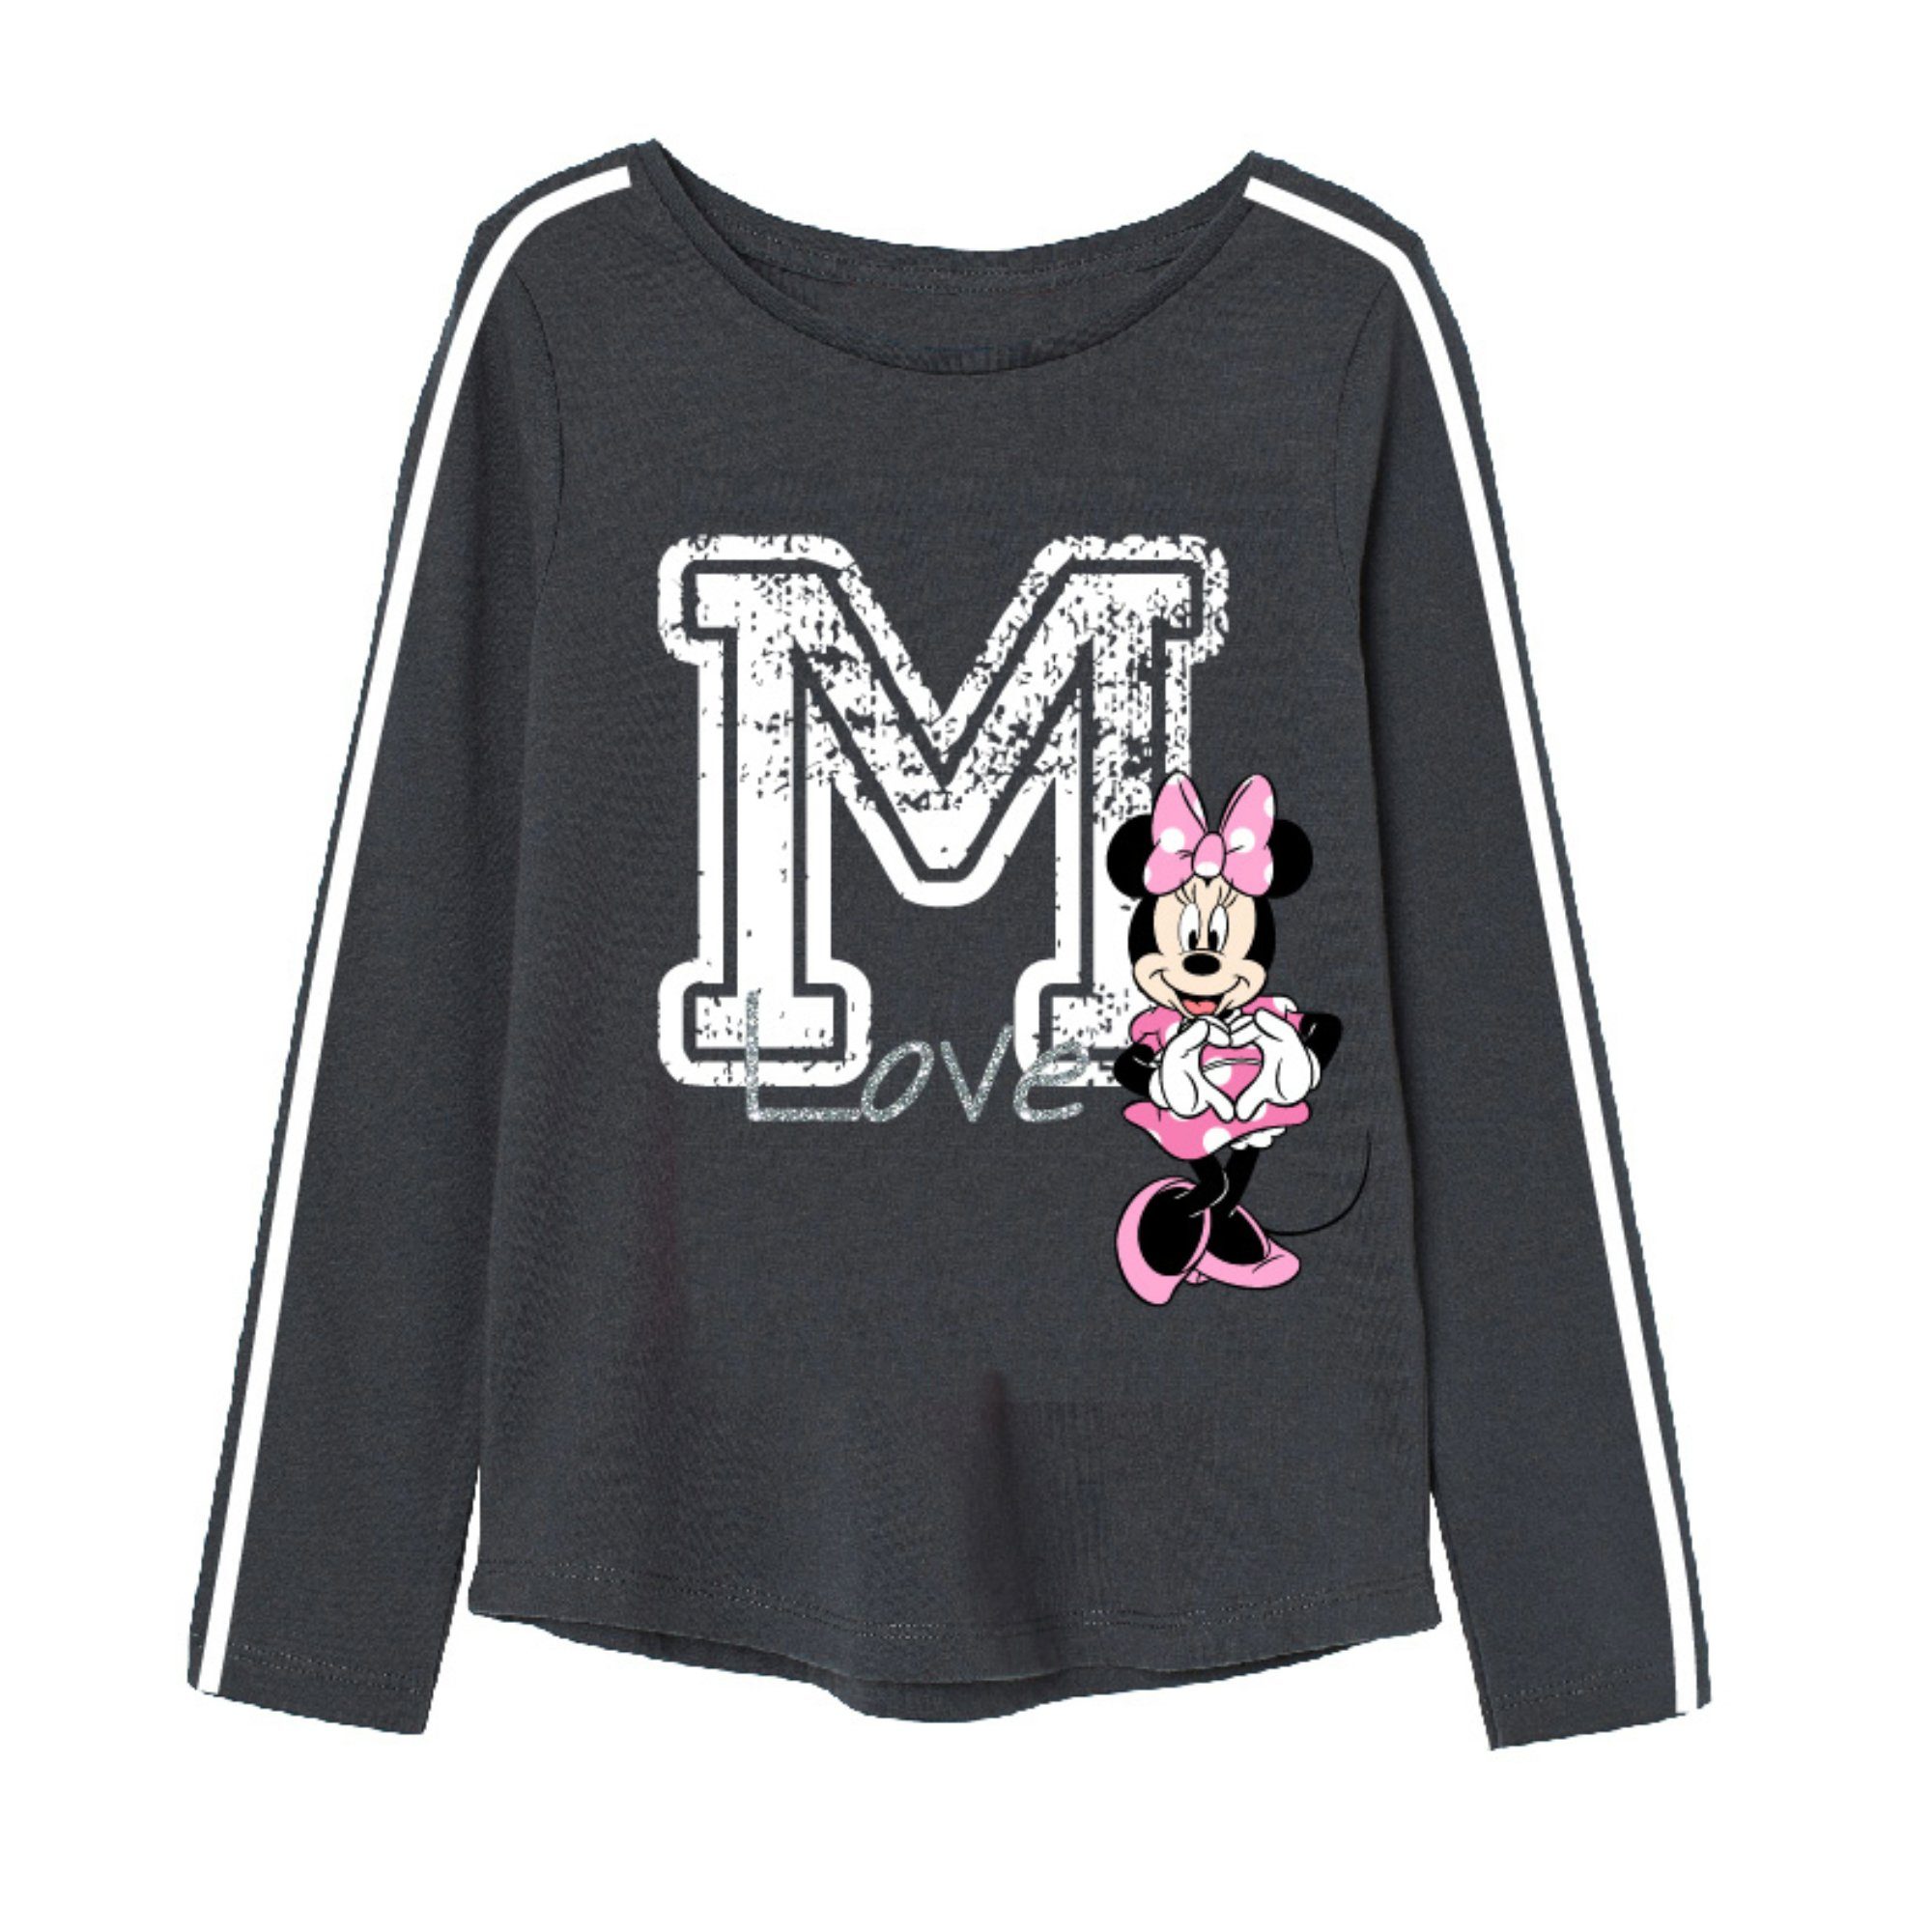 Disney Minnie Mouse Langarmshirt baumwolle, oder Kinder Gr. 104 Rosa Grau Shirt 134, Dunkelgrau Minnie bis Maus Mädchen 100